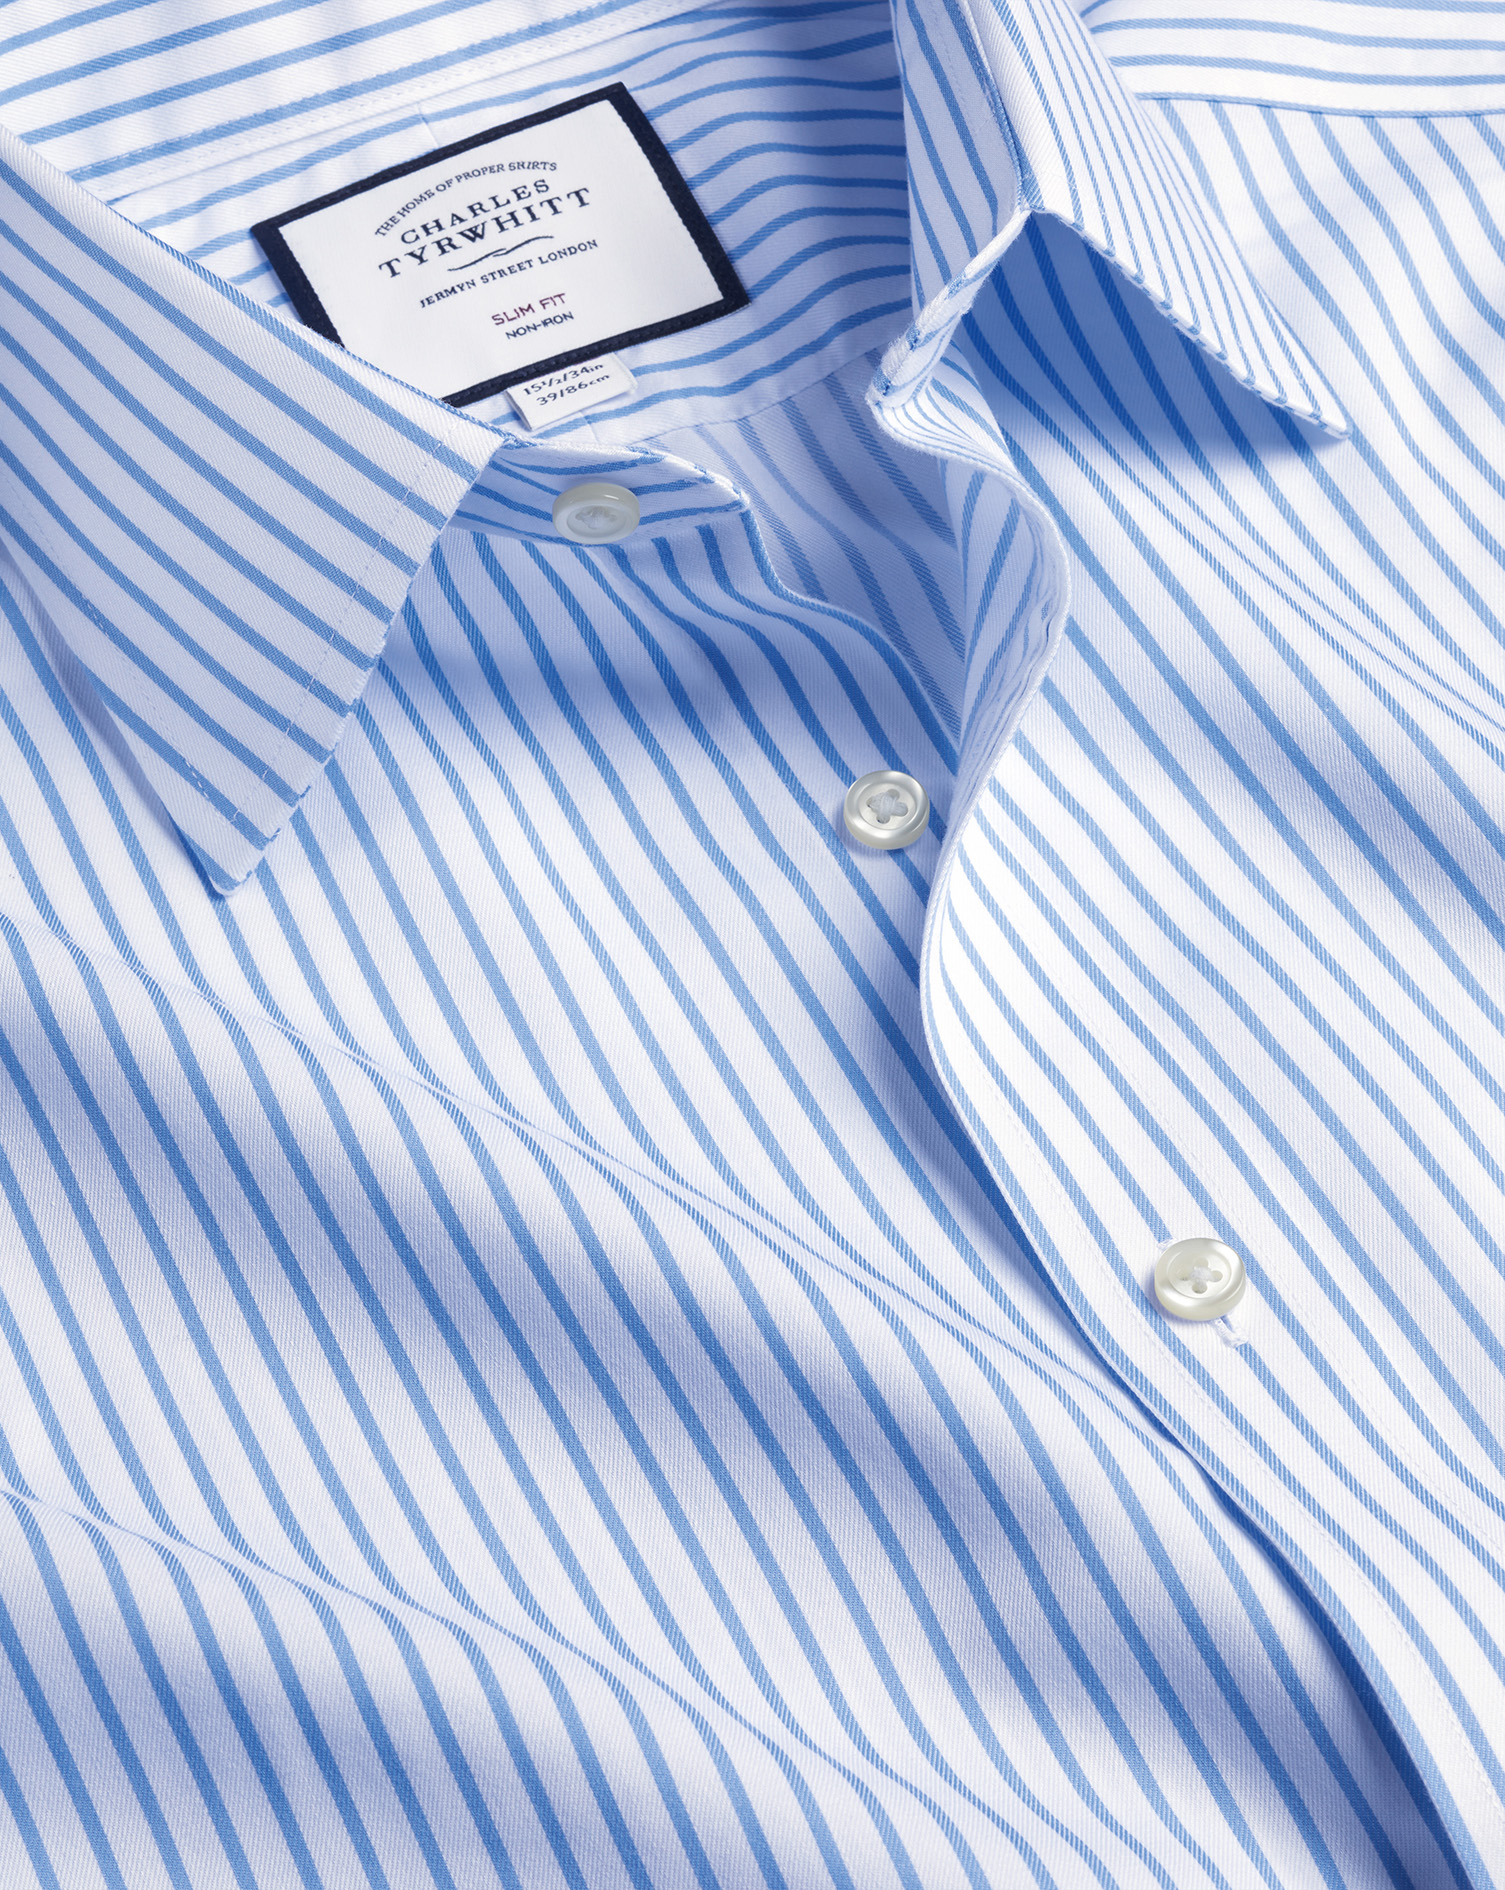 Men's Charles Tyrwhitt Non-Iron Twill Stripe Dress Shirt - Cornflower Blue French Cuff Size Large Co